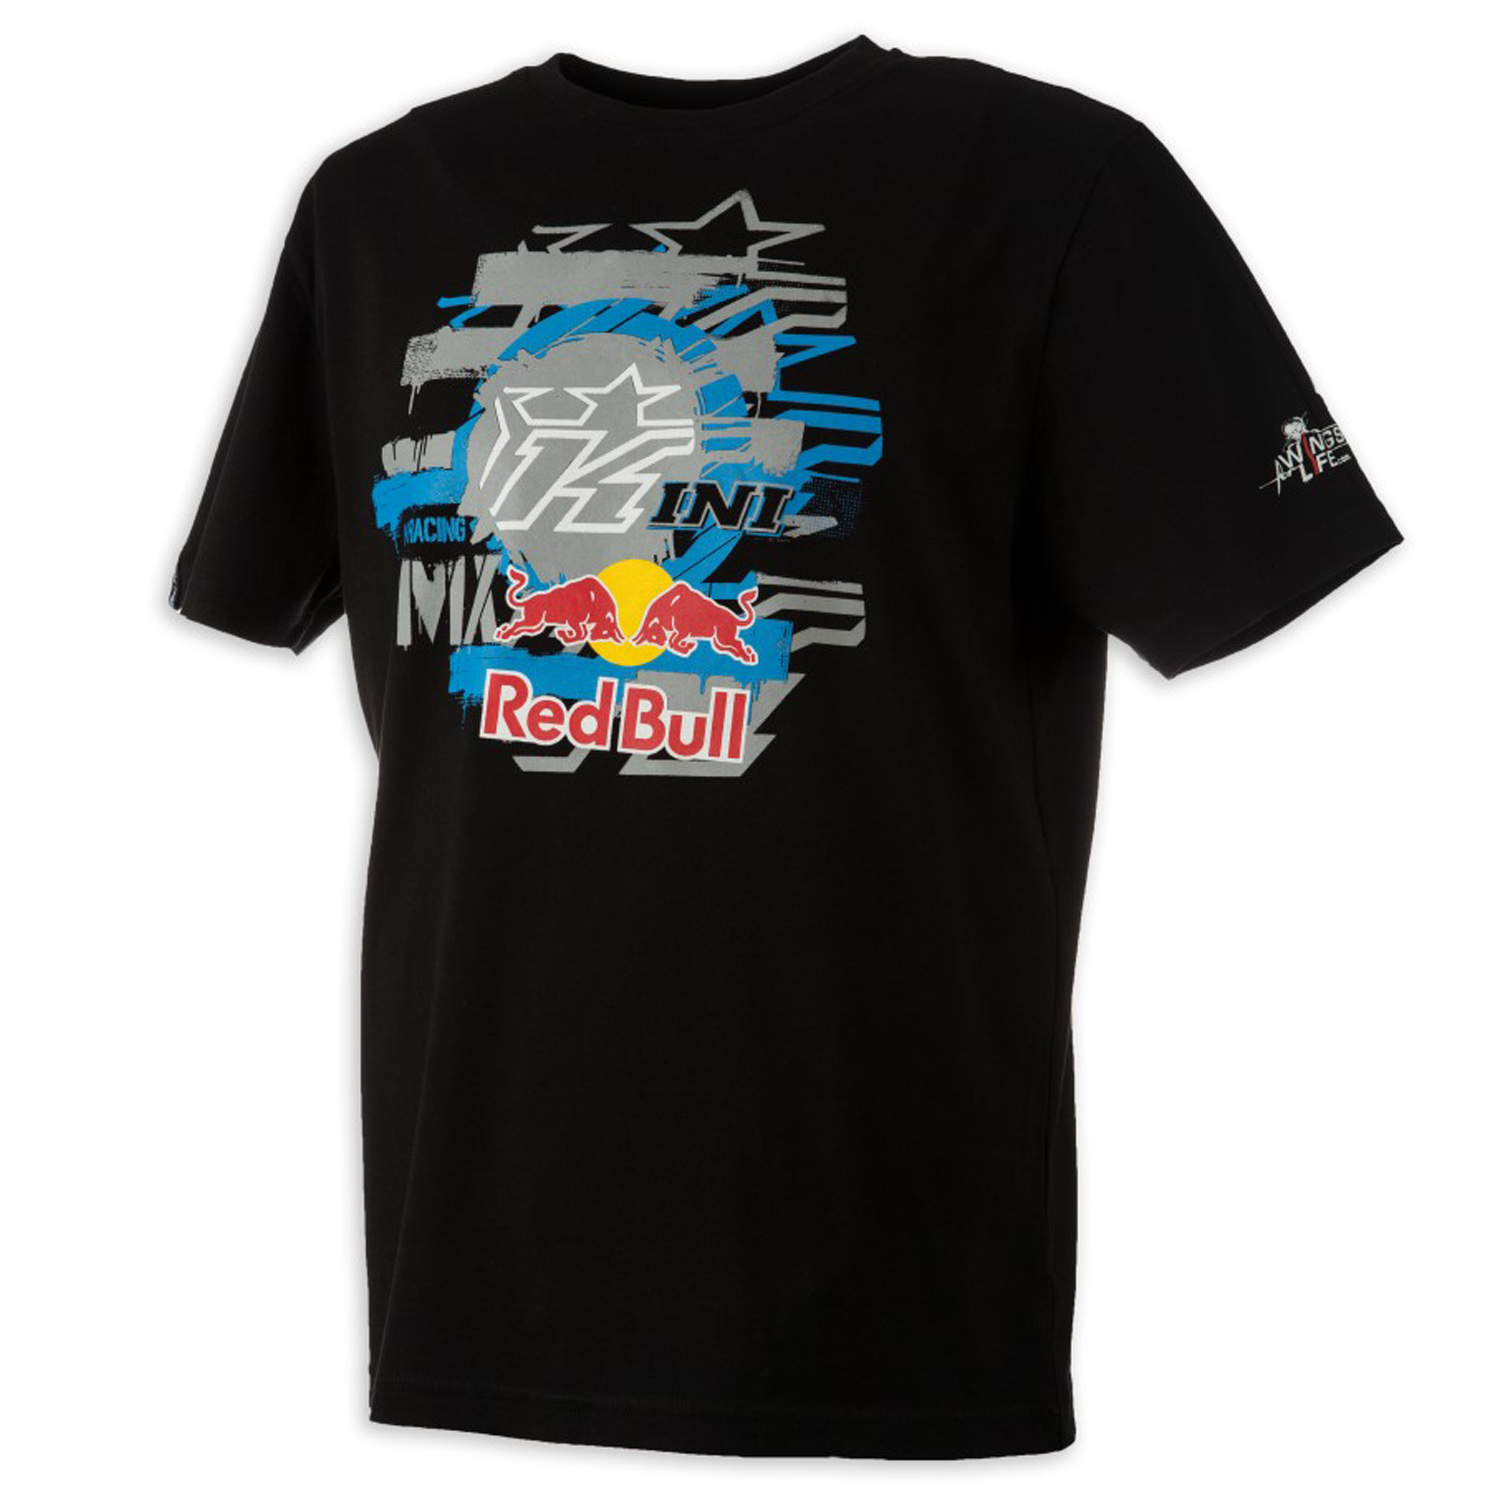 Kini Red Bull T-Shirt Layered Noir